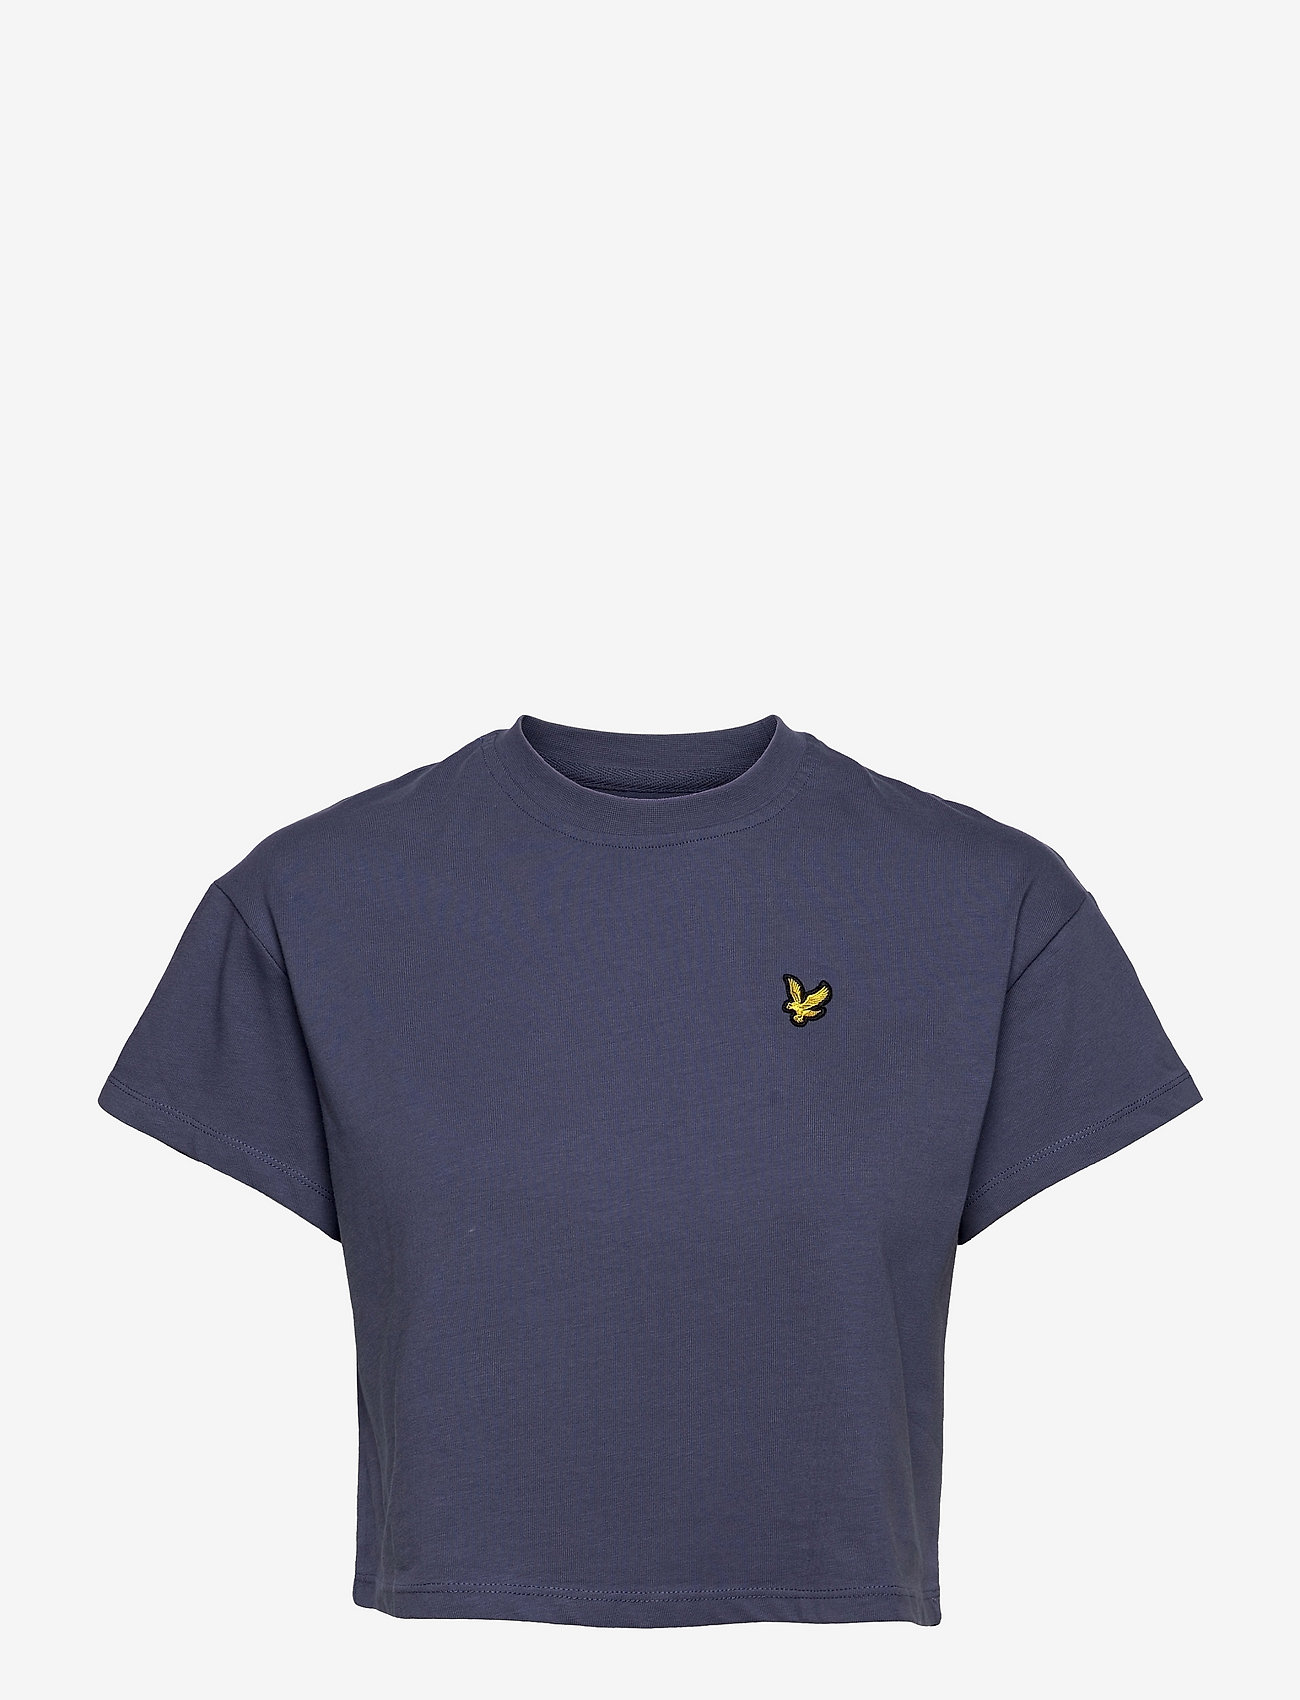 Lyle & Scott - Cropped T-shirt - Īsi topi - nightshade blue - 0